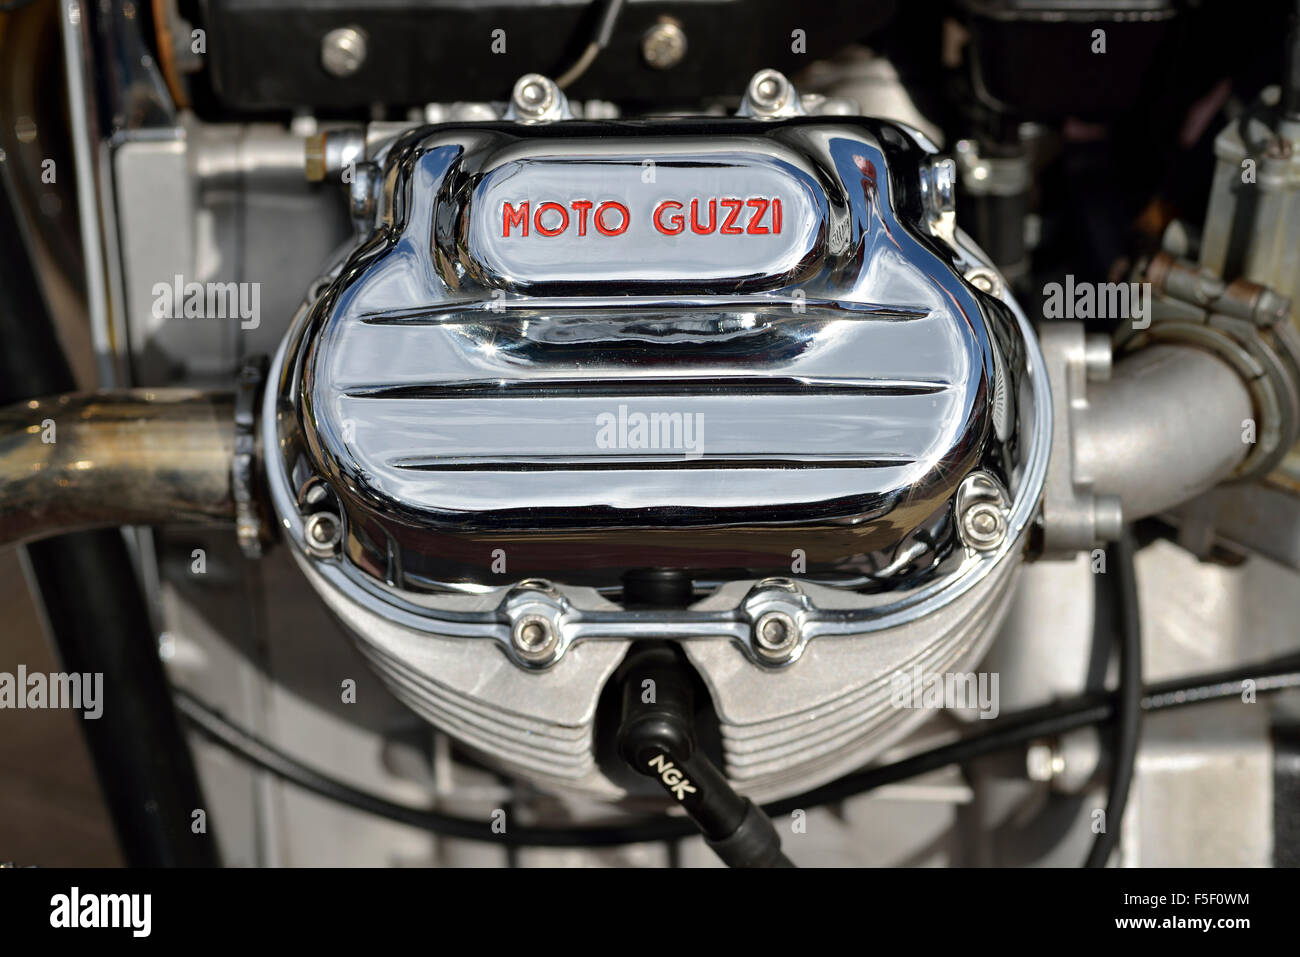 1972 Moto Guzzi V7 cylinder head Stock Photo